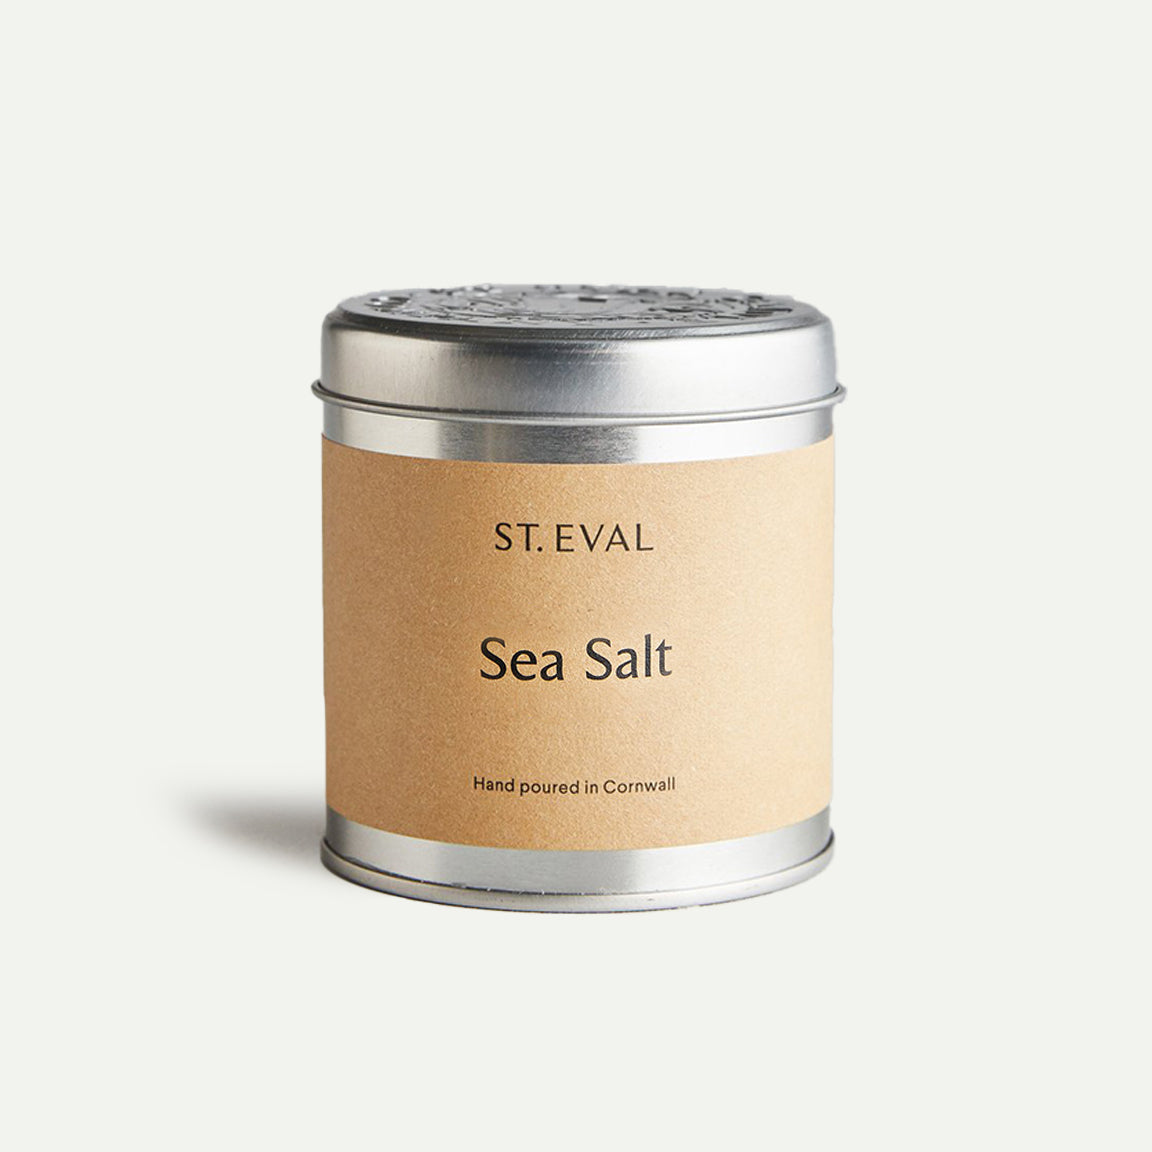 St. Eval Sea Salt Scented Candle